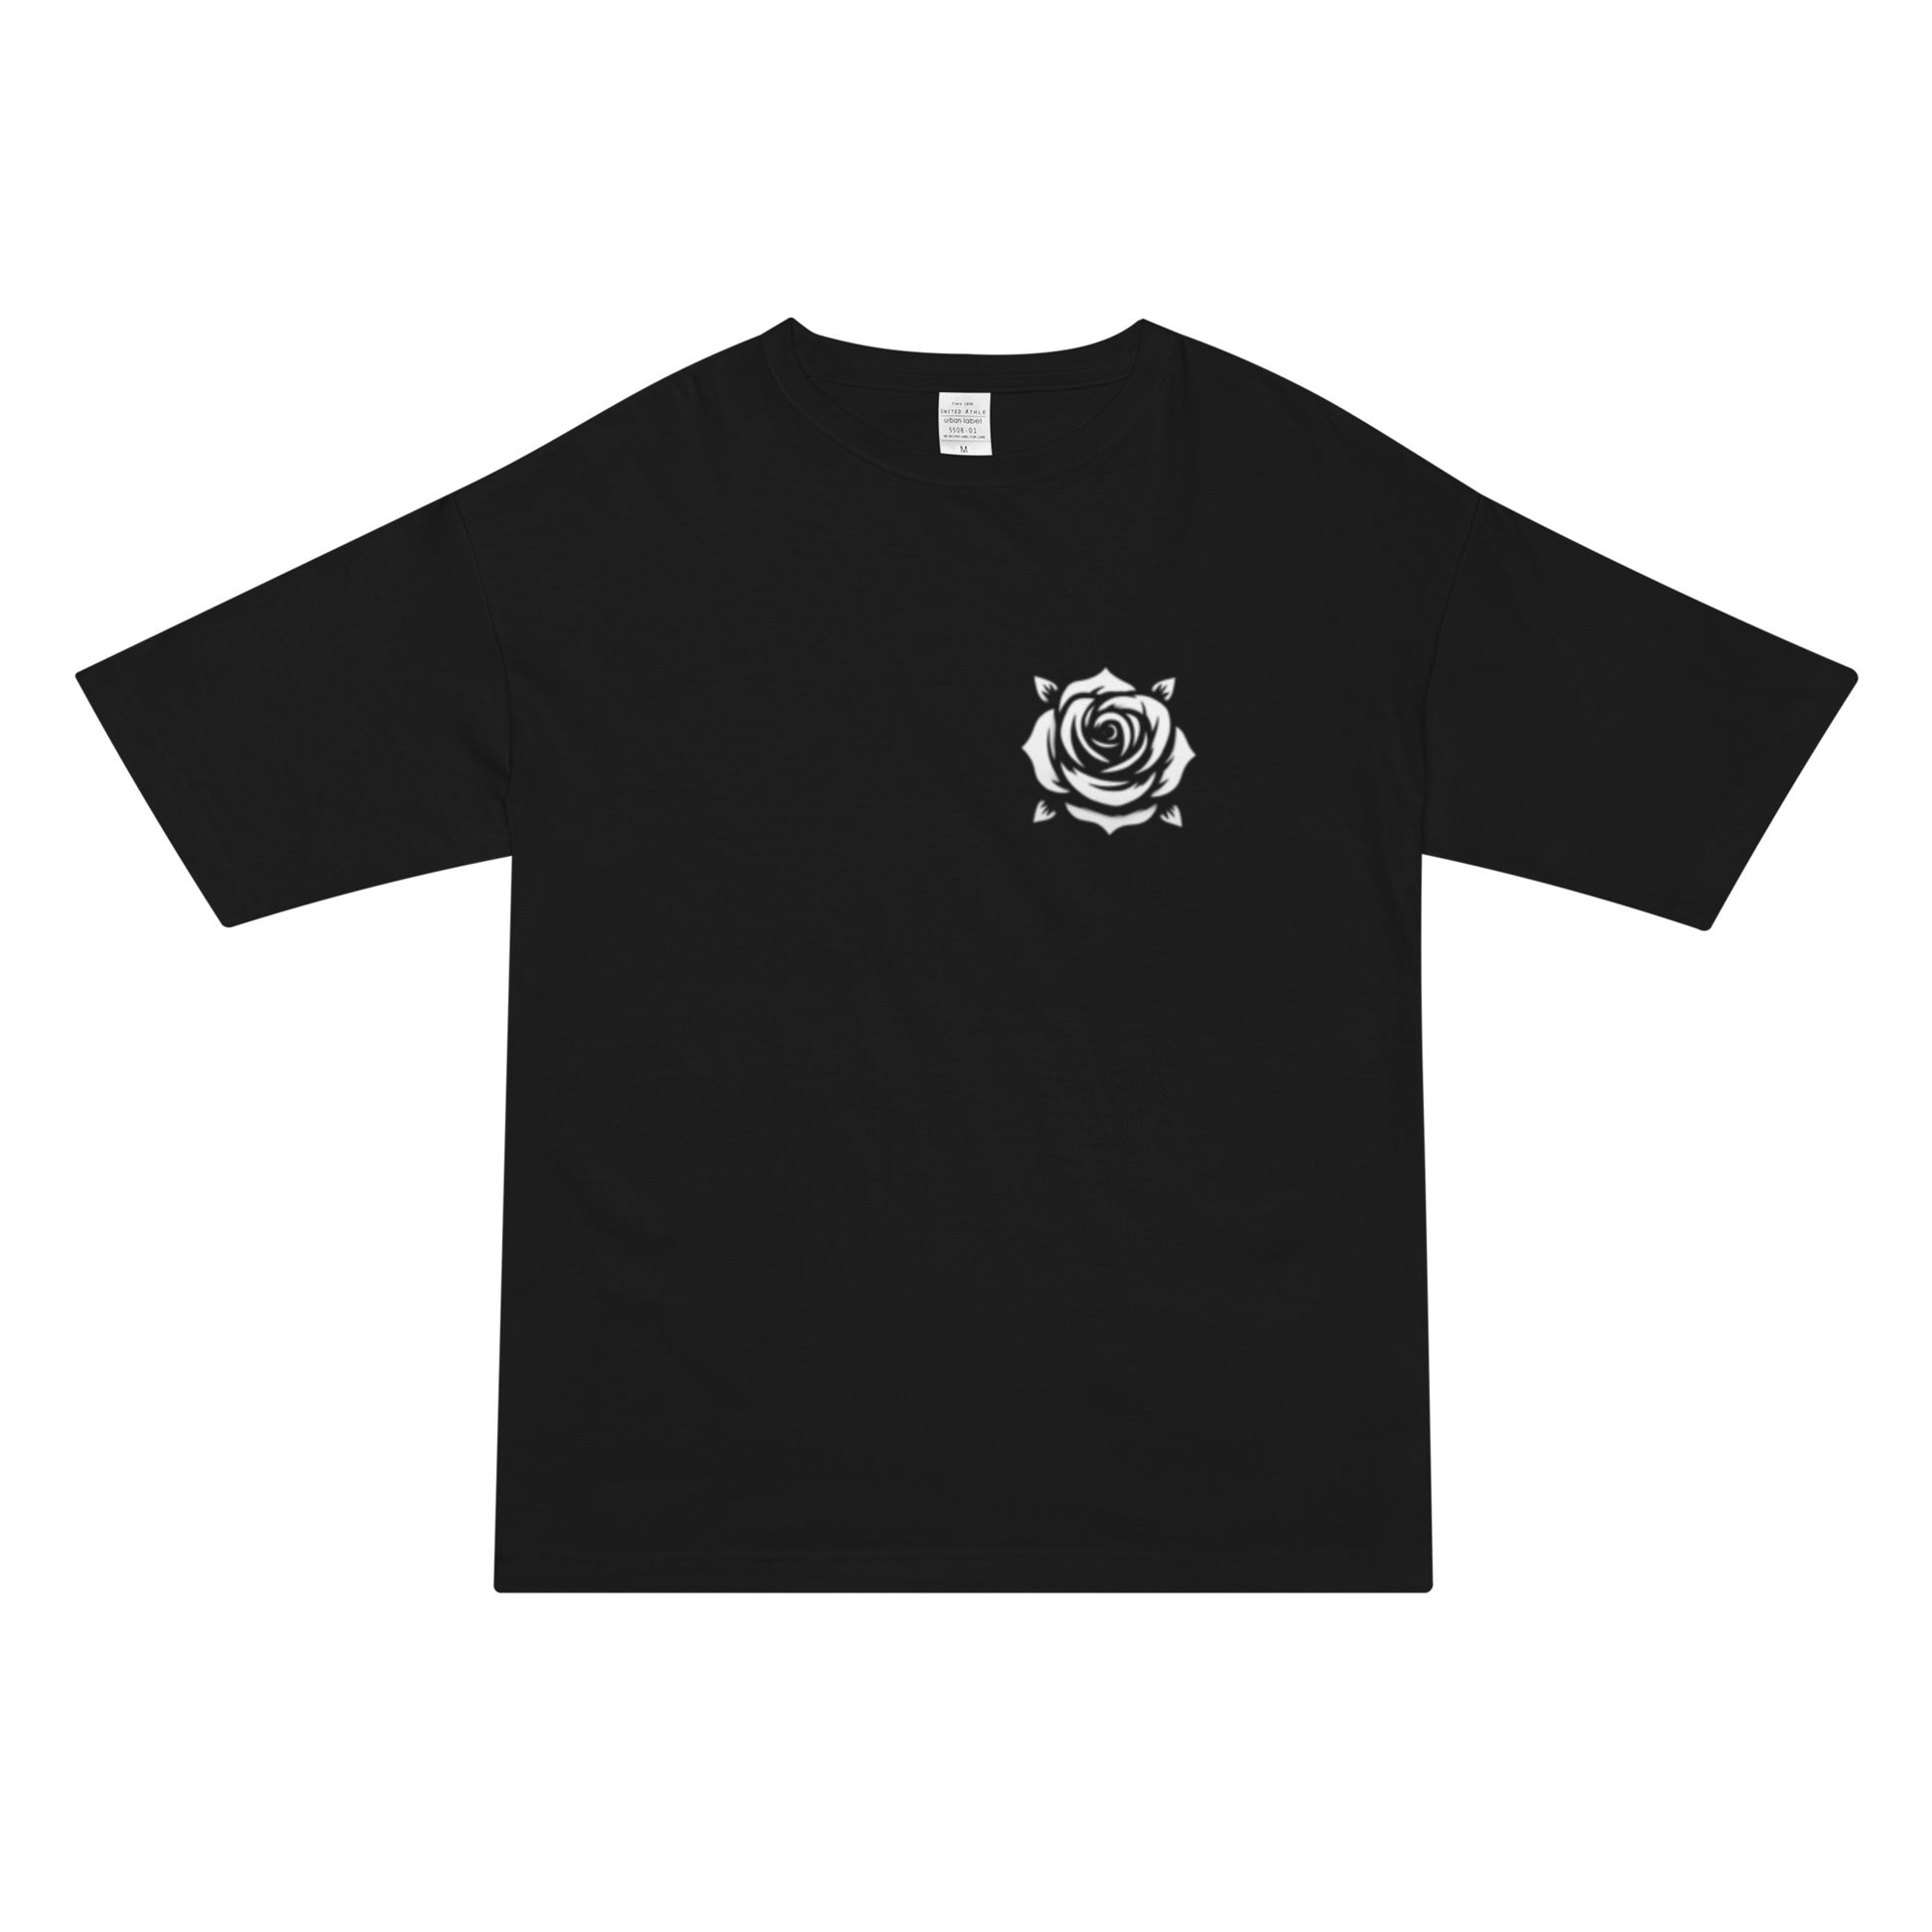 Trust. T-Shirt Black - ROSE Society